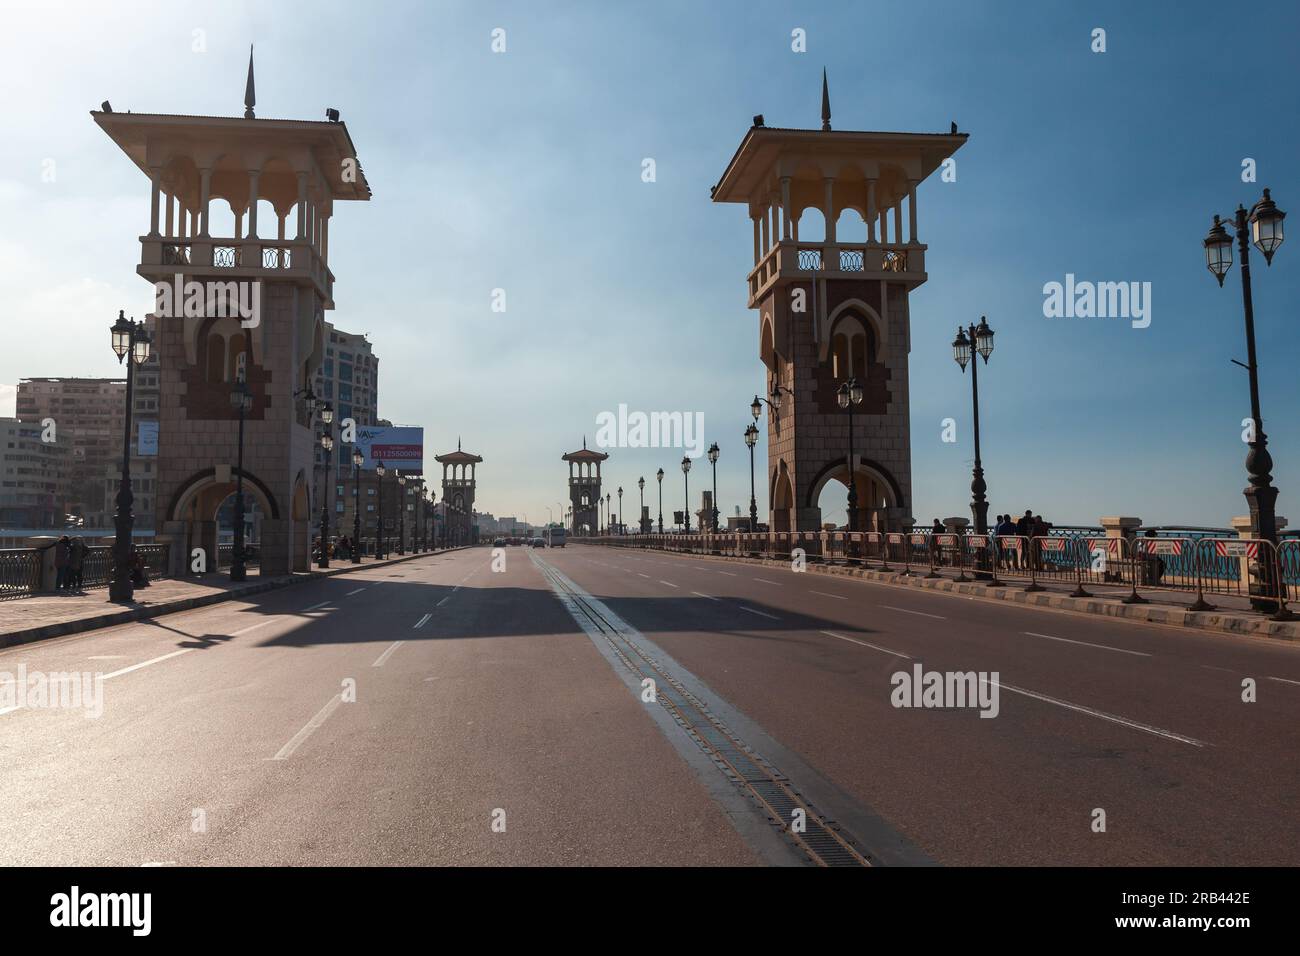 Alexandria, Egypt - December 14, 2018: Stanley Bridge perspective view, popular landmark of Alexandria, ordinary people walk the street Stock Photo